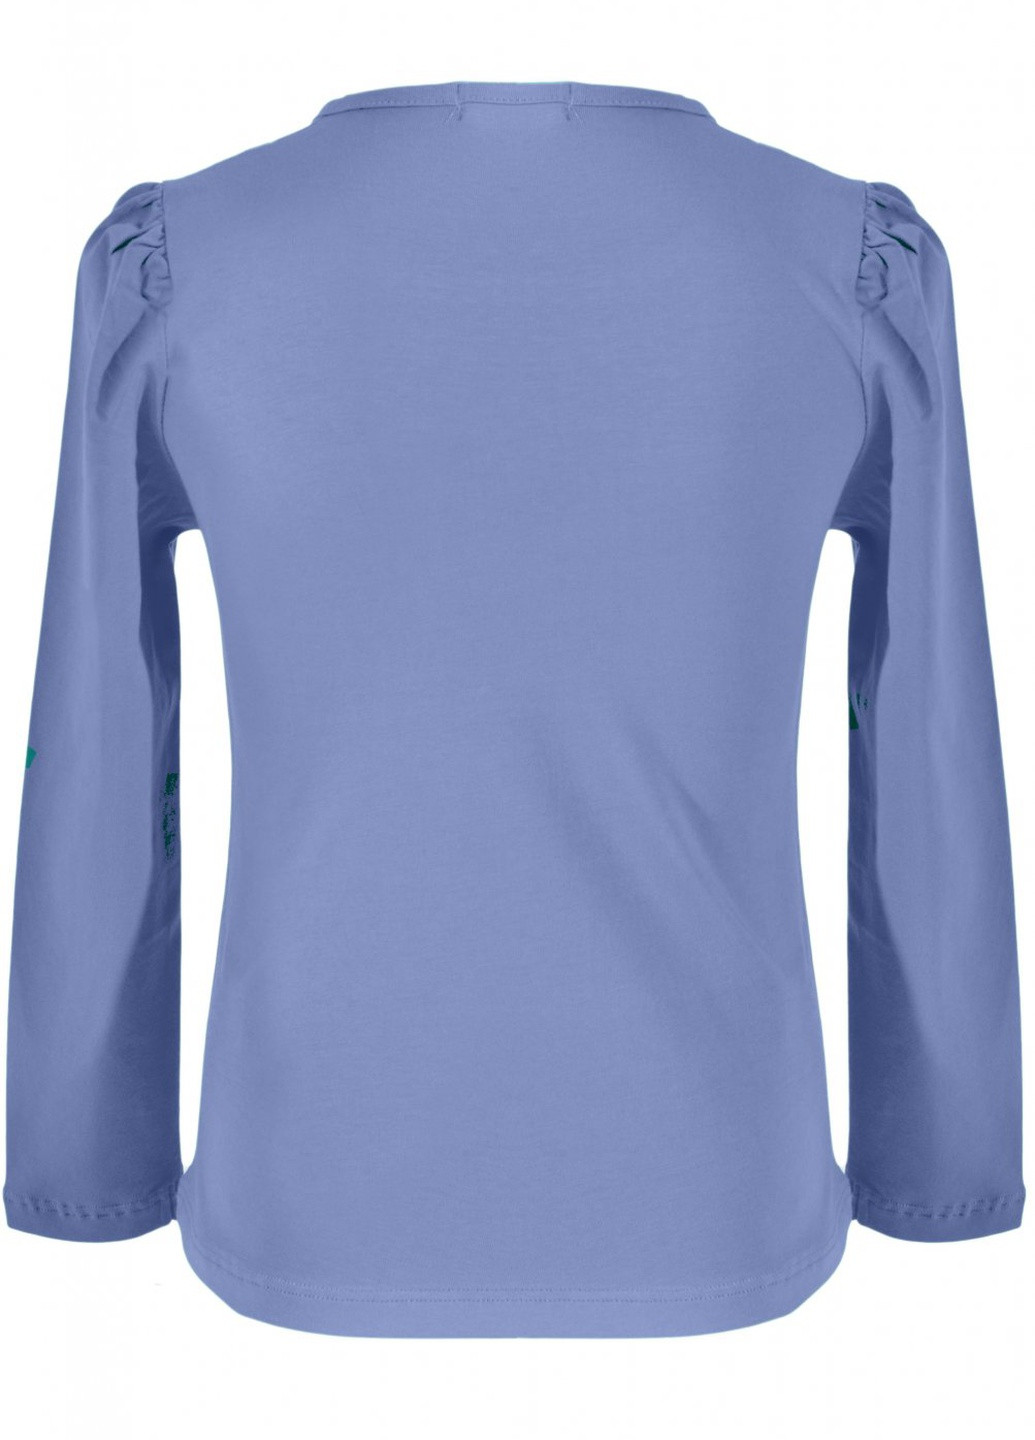 Синяя футболки батник девочка (w019-93) Lemanta